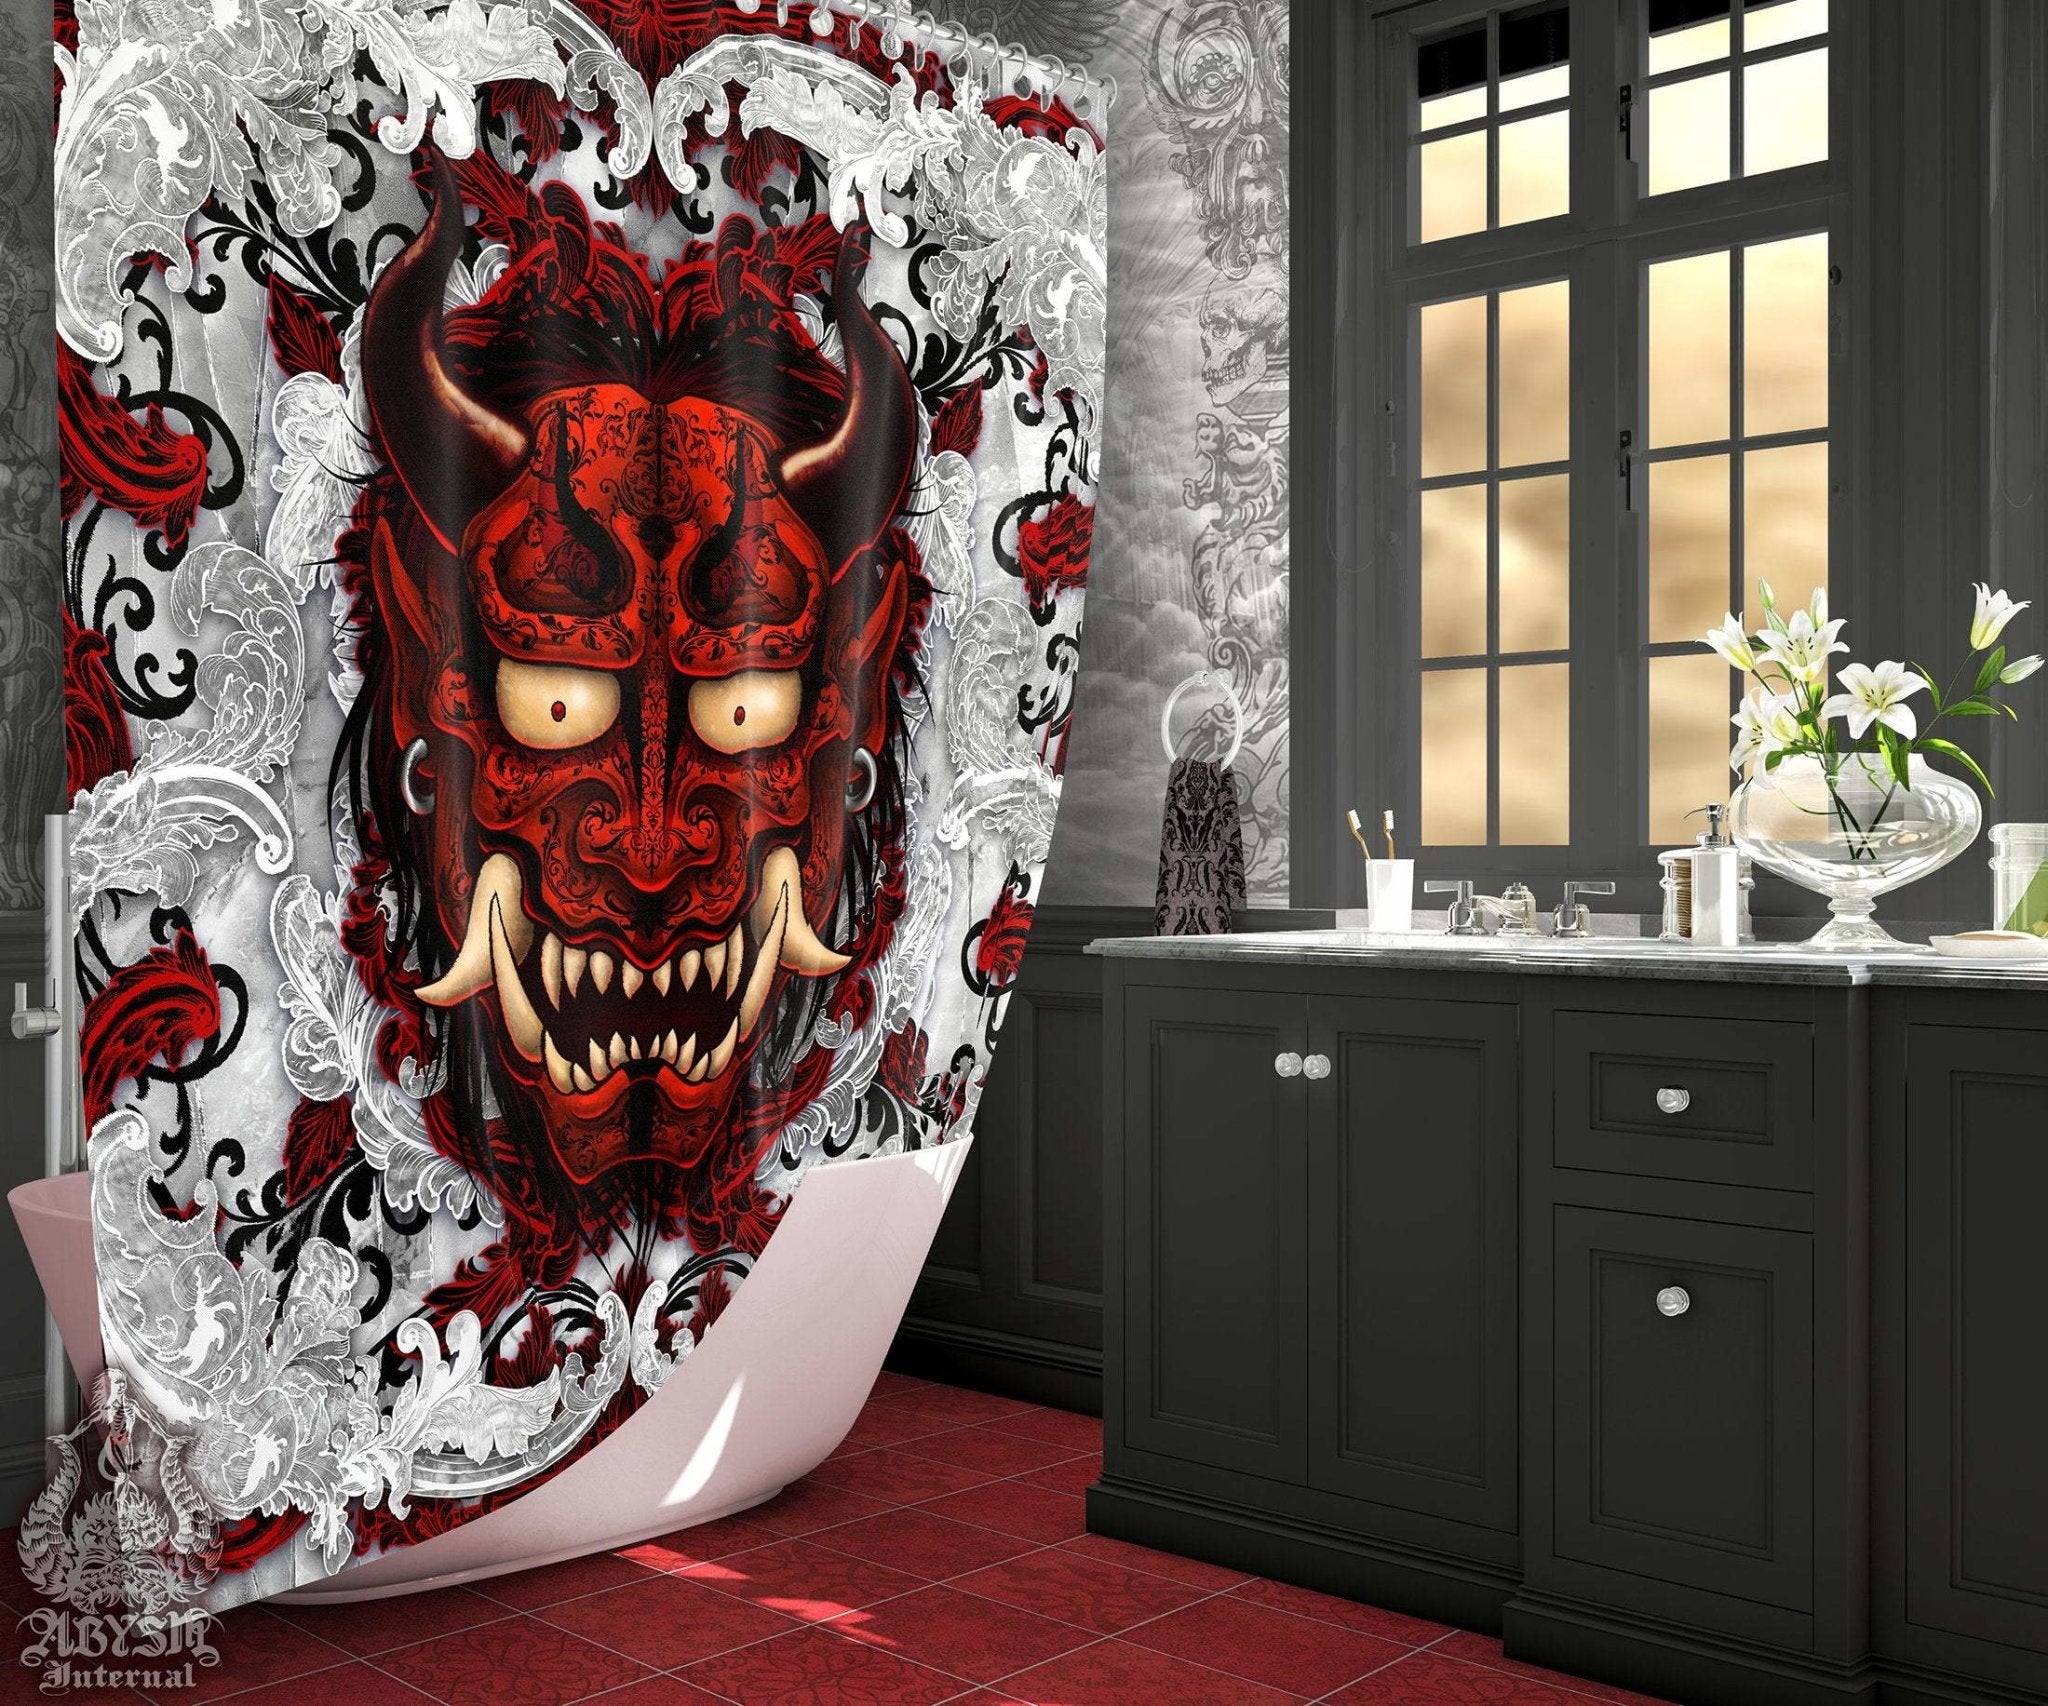 Oni Shower Curtain, Anime, Gothic Bathroom Decor, White Goth, Japanese Demon - Bloody - Abysm Internal